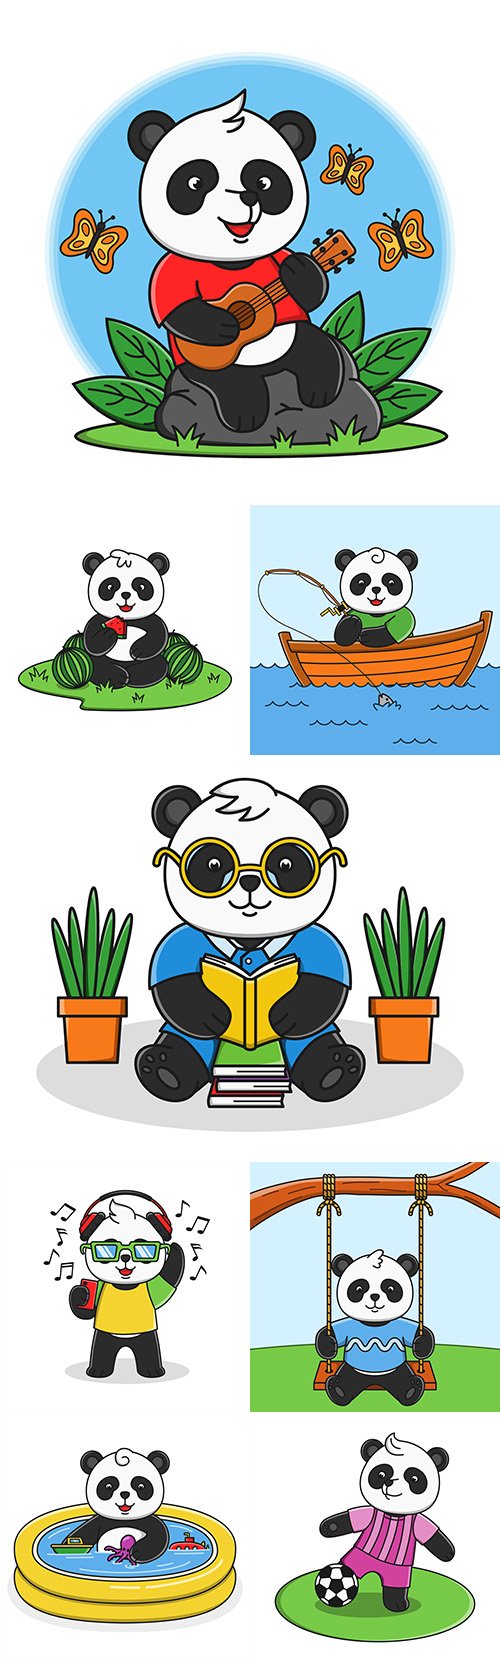 Panda cute cartoons collection of illustrations